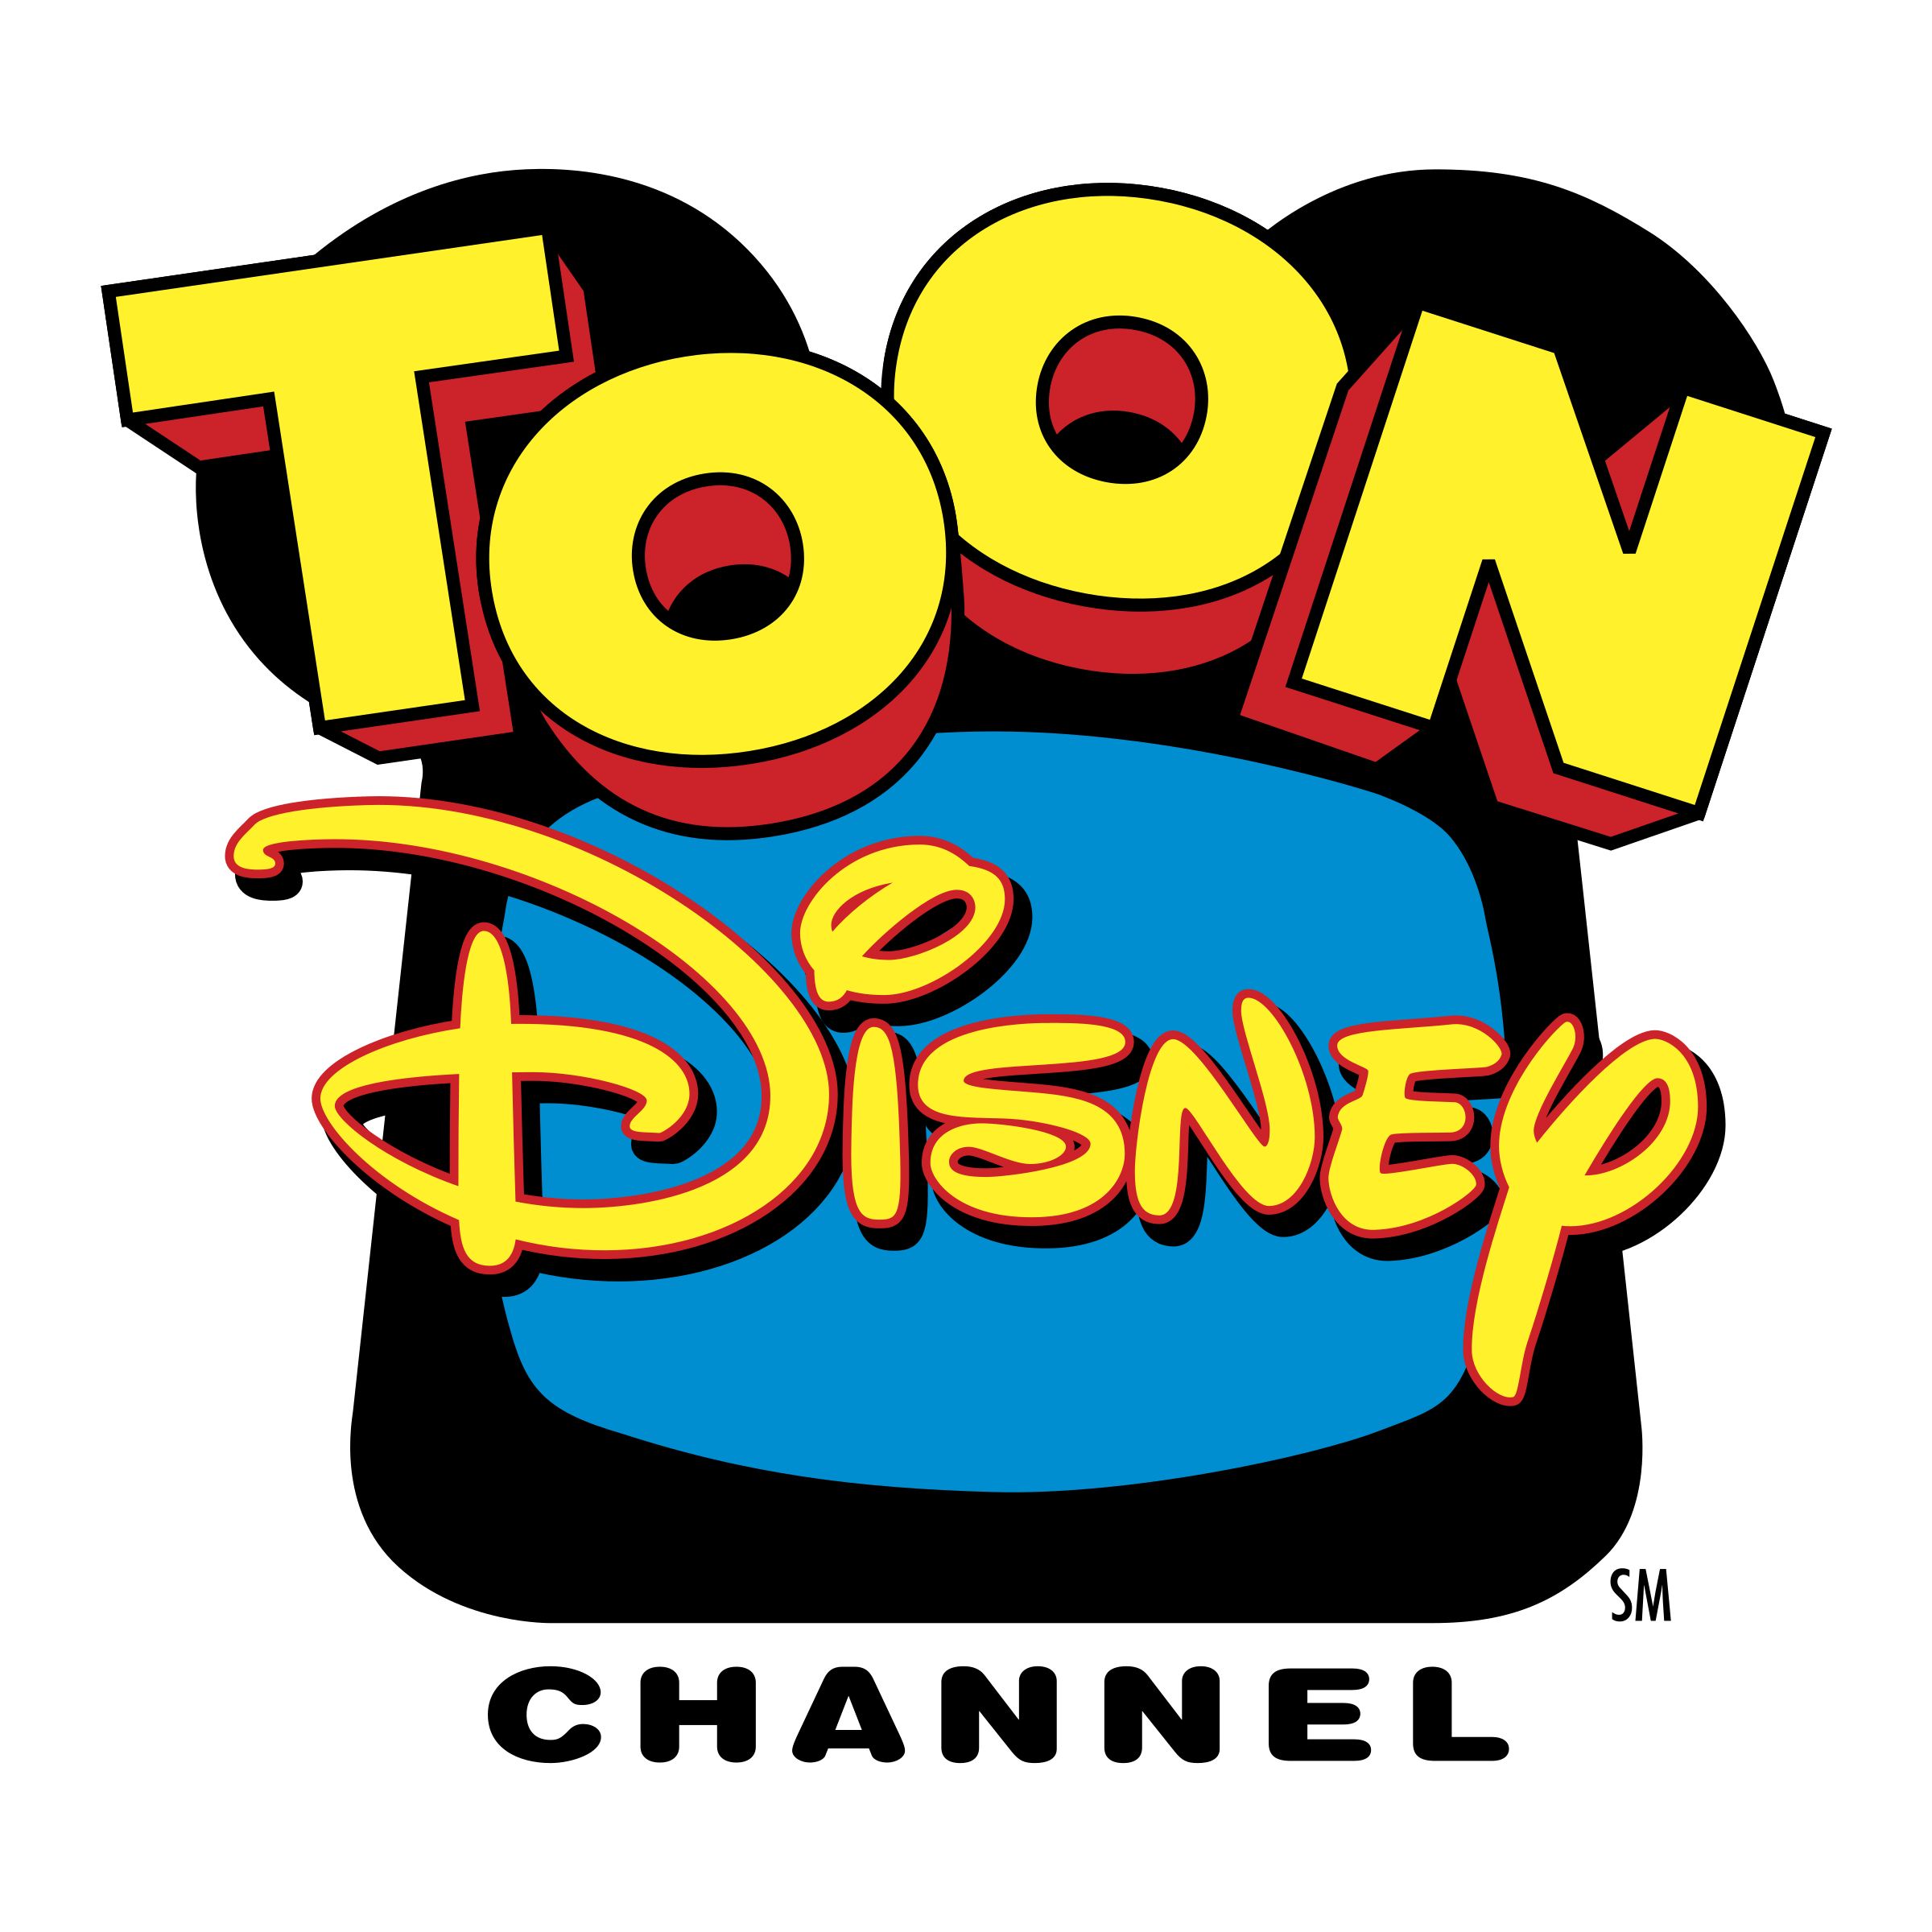 Toon Disney Logo - Toon Disney Channel Logo PNG Transparent & SVG Vector